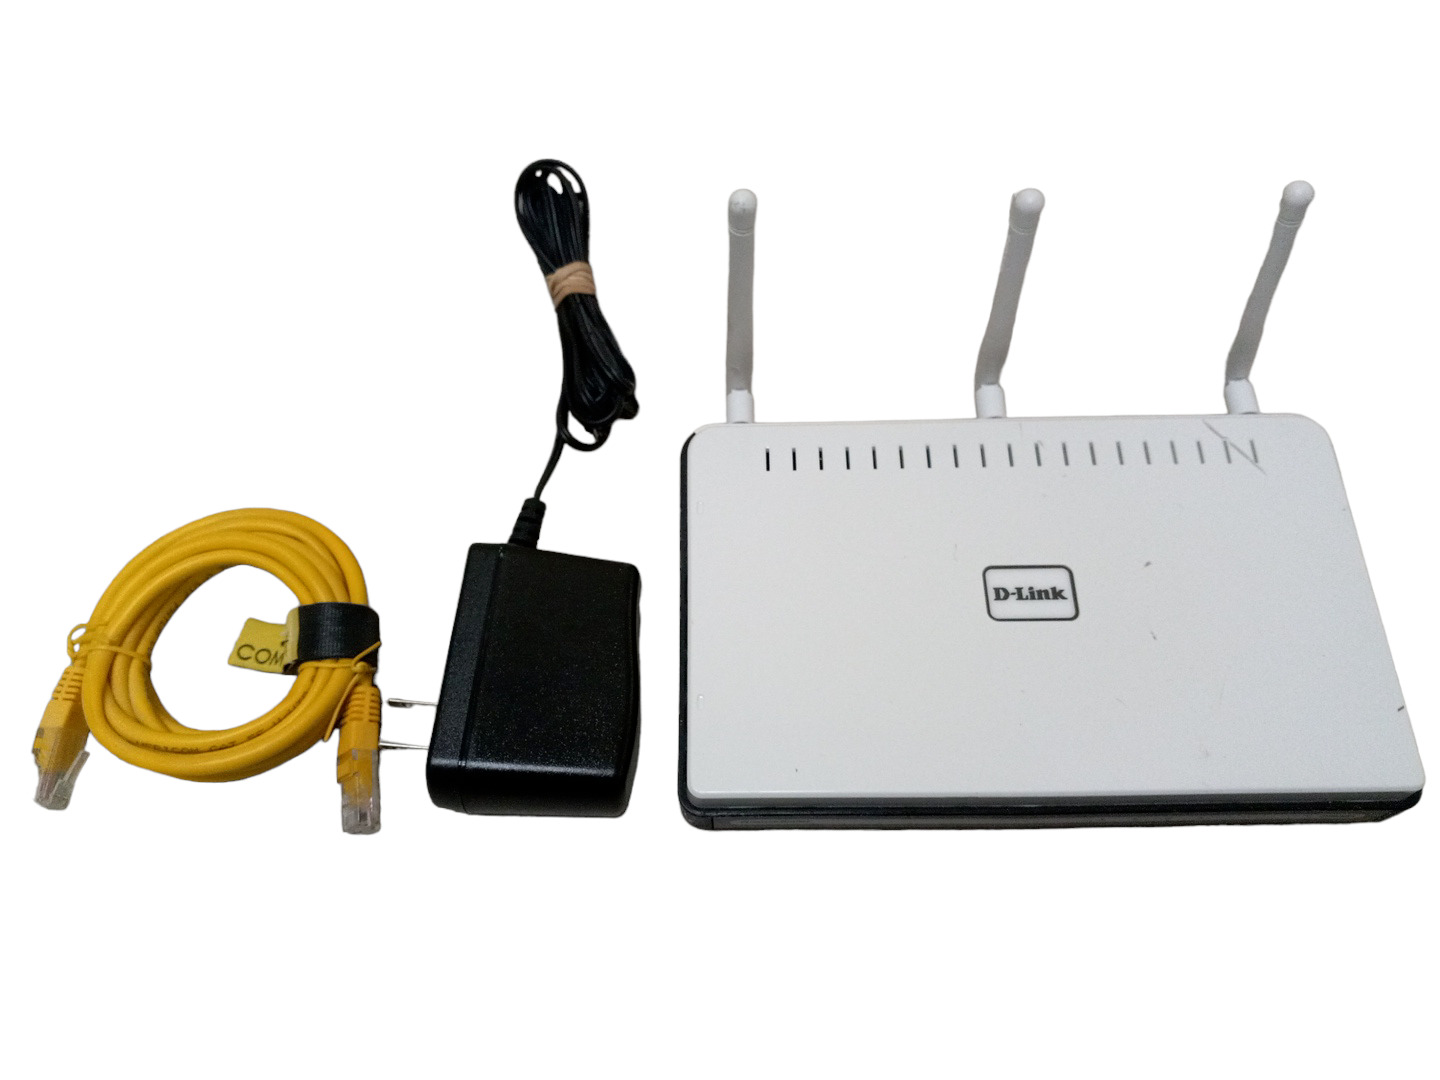 D-Link DIR-655 300 Mbps 4-Port Gigabit Wireless N Router